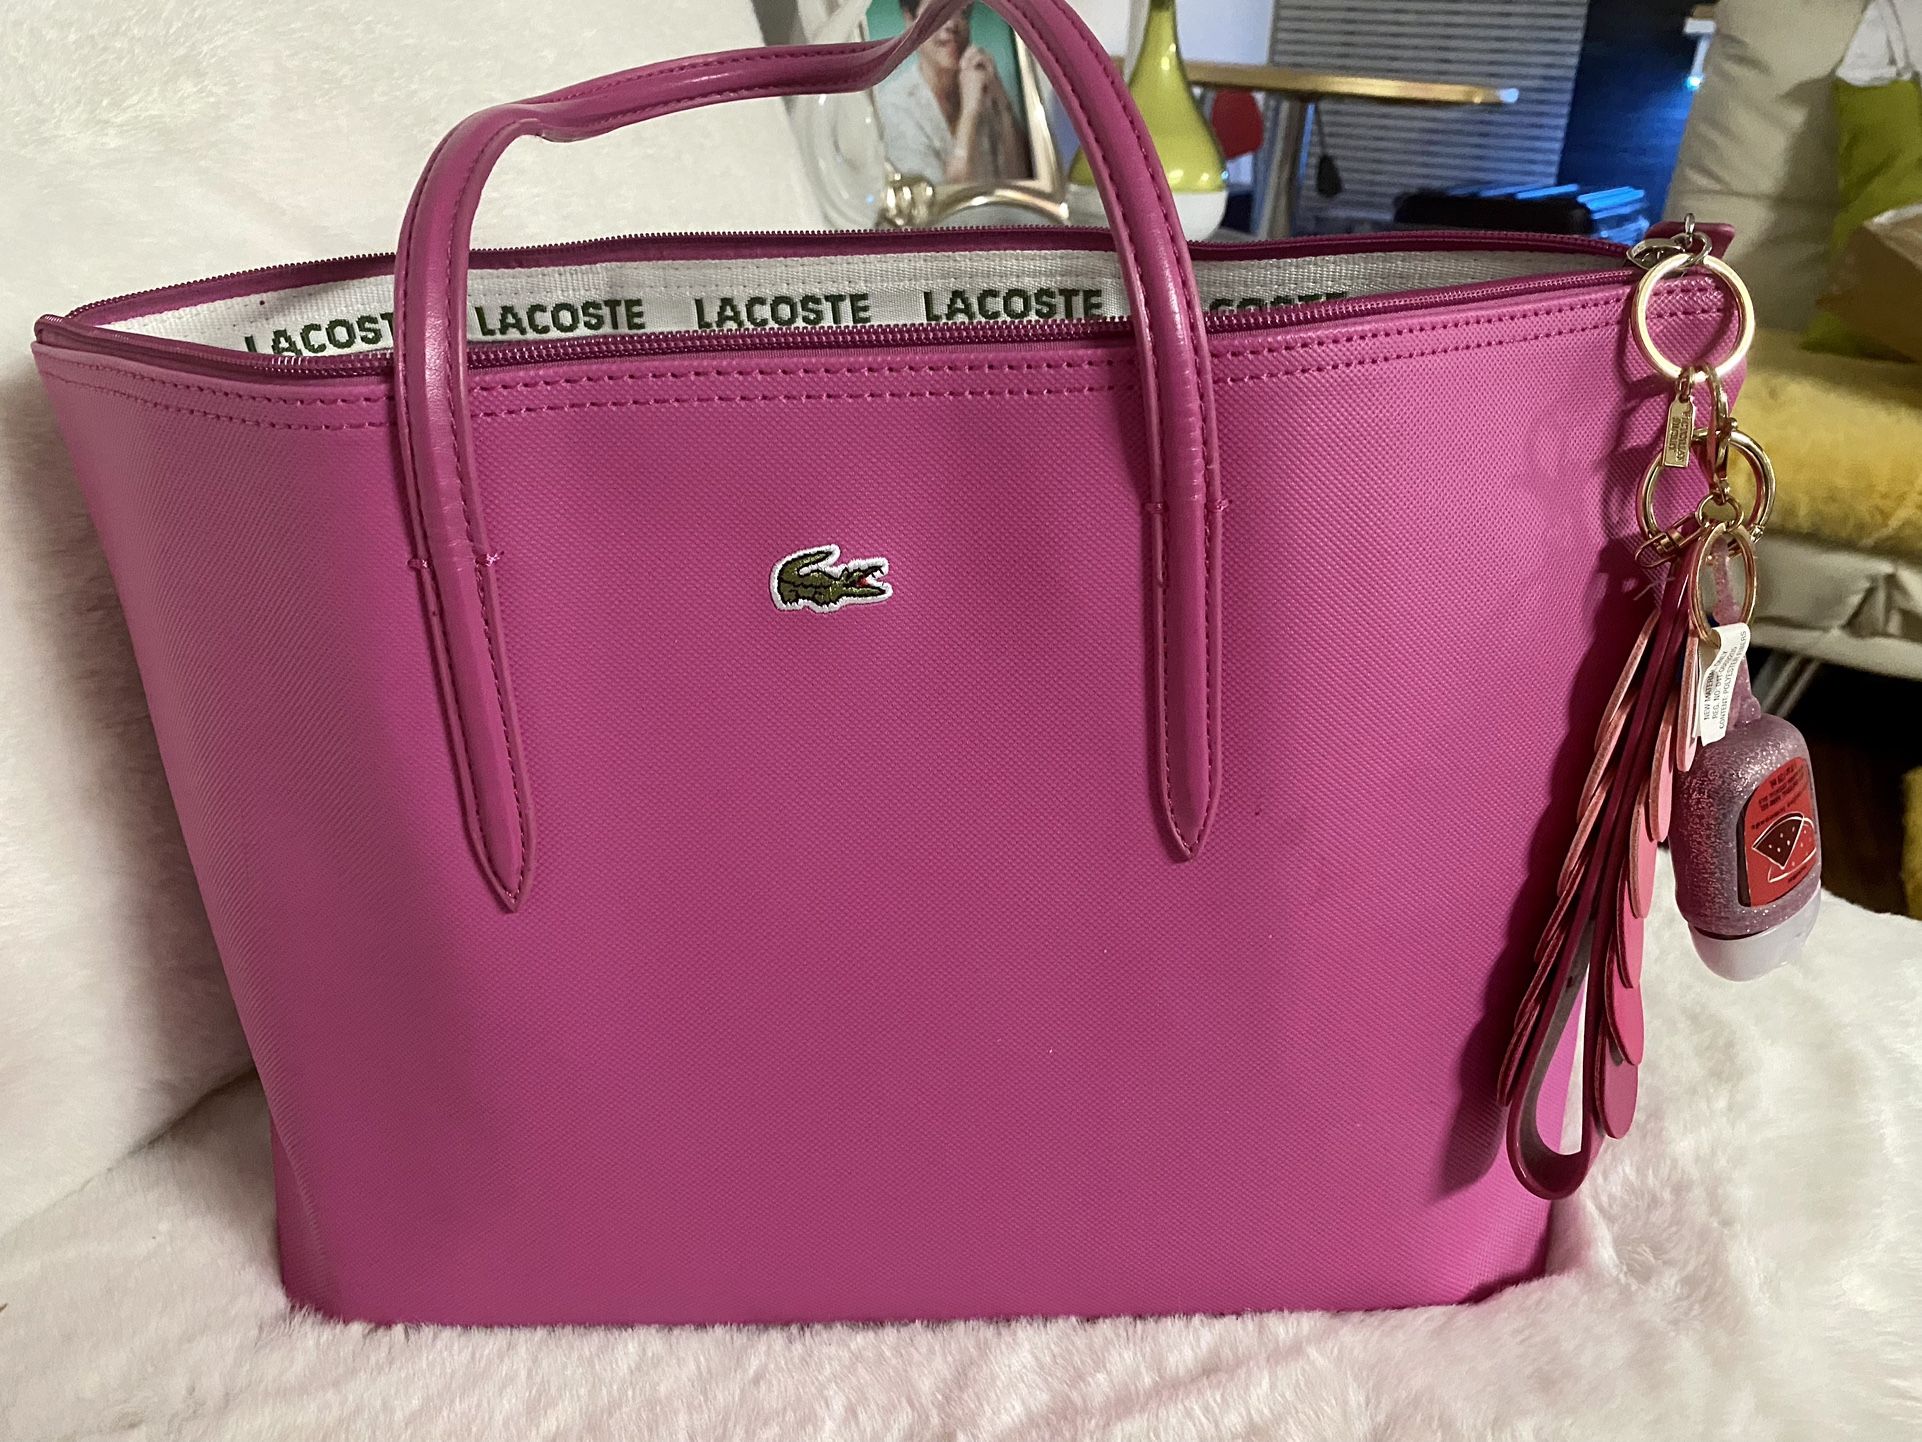 Lauren Conrad Bag for Sale in San Diego, CA - OfferUp